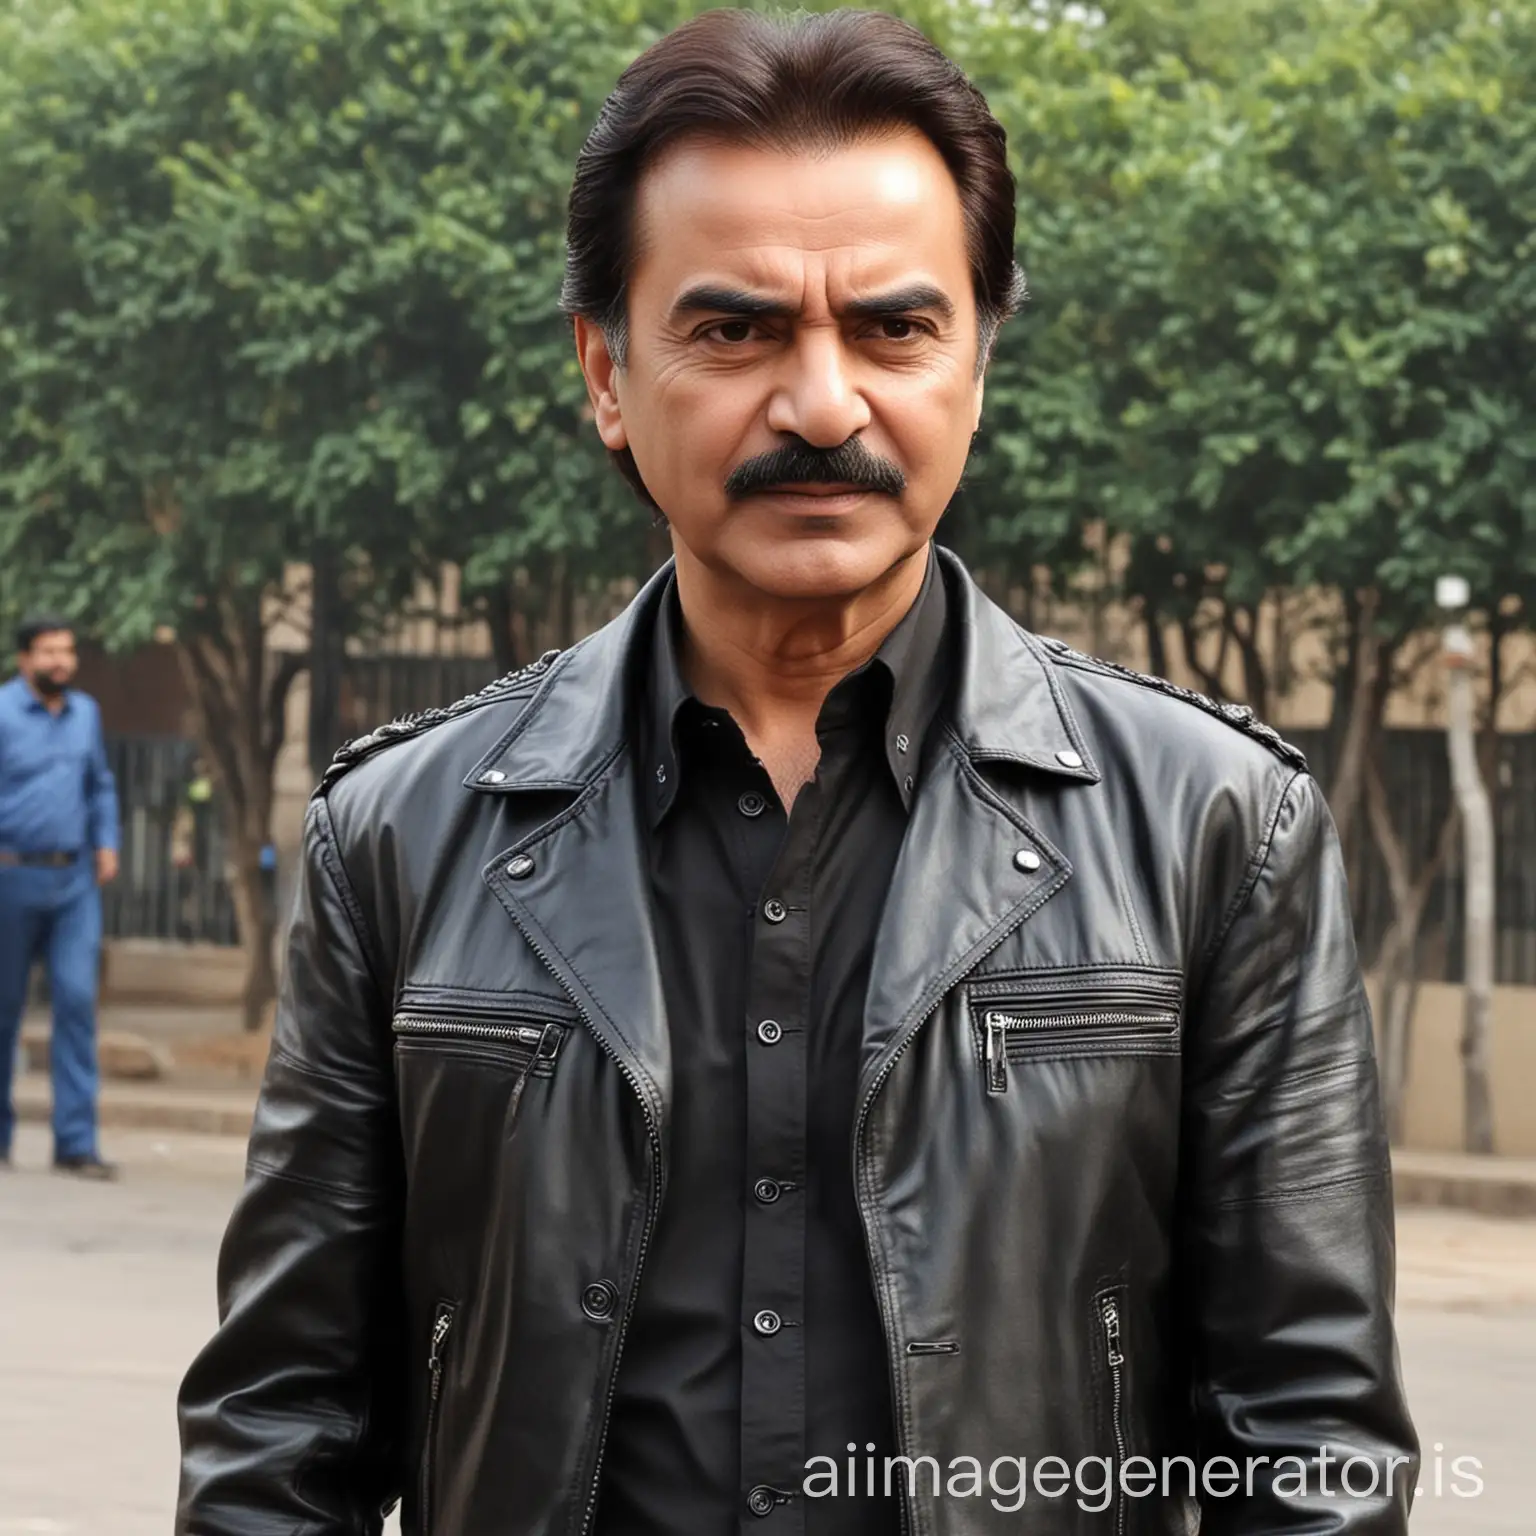 hot pakistani politician sardar ayaz sadiq in leather jacket